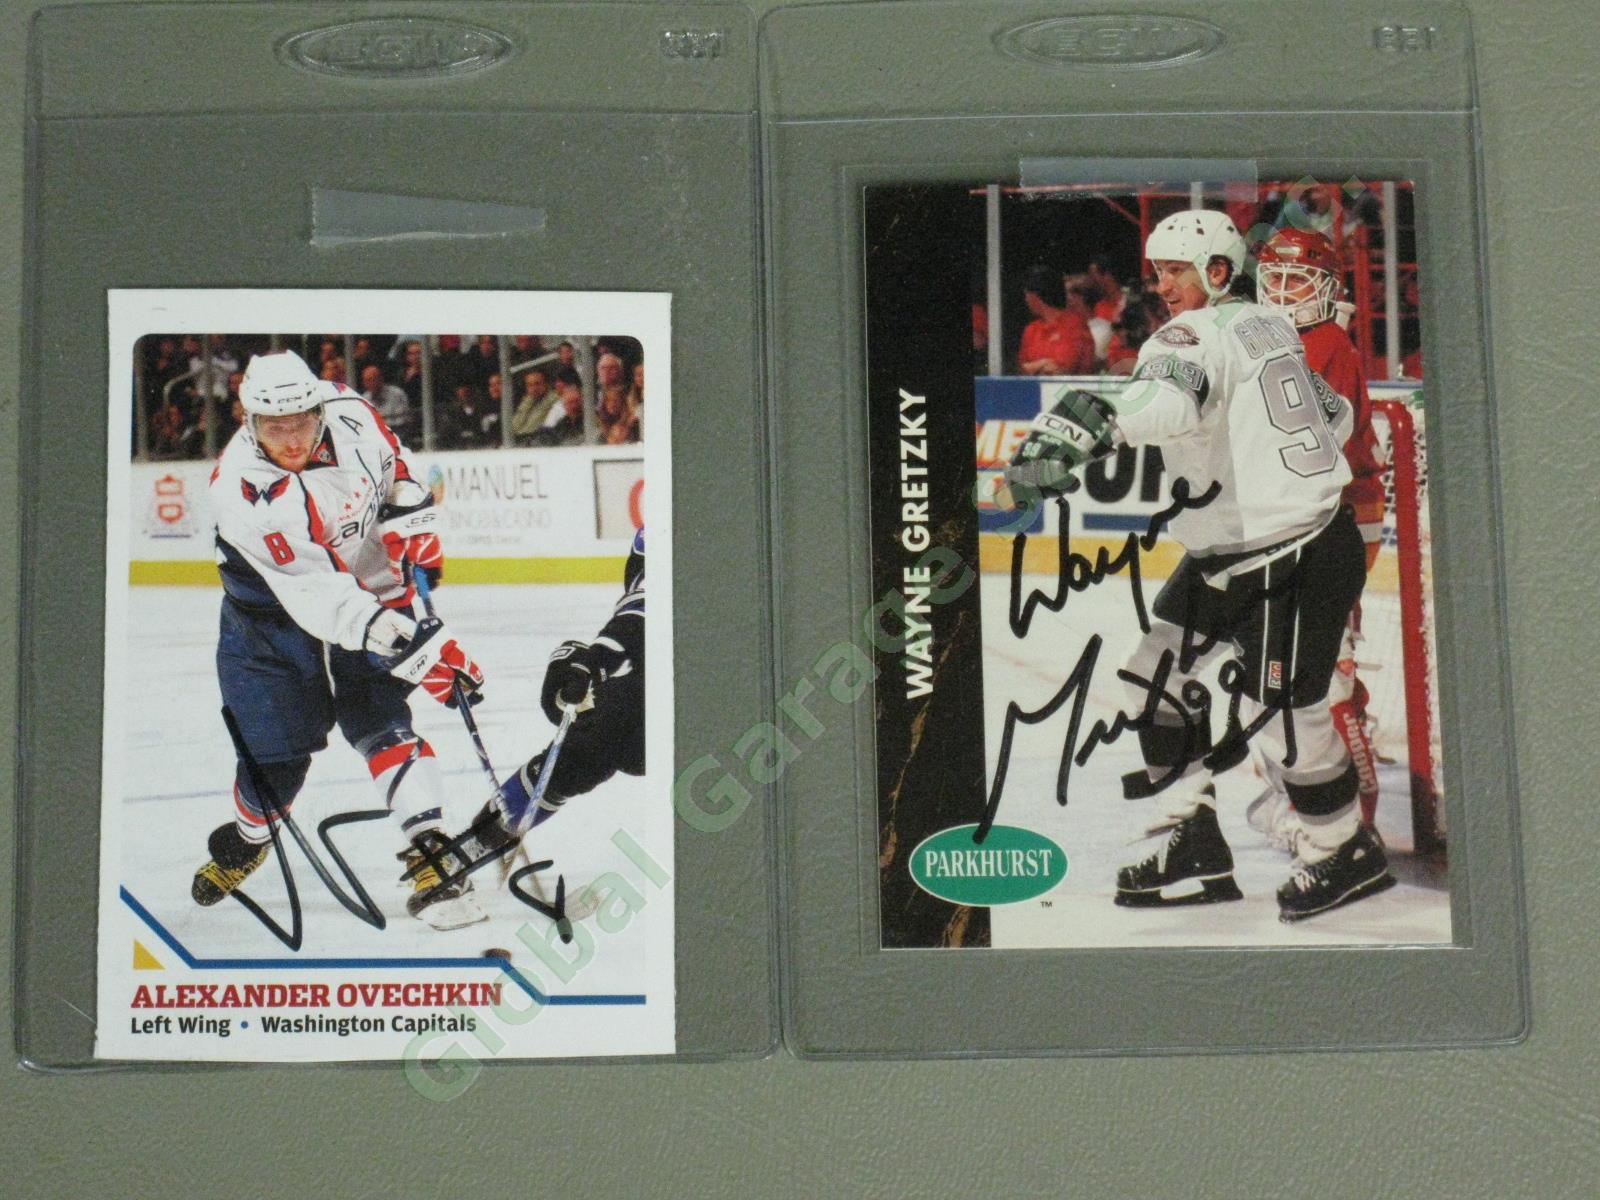 60+ Signed Sports Photo Card Lot NFL NBA MLB NHL Gretzky Ovechkin Ripken HOF ++ 1